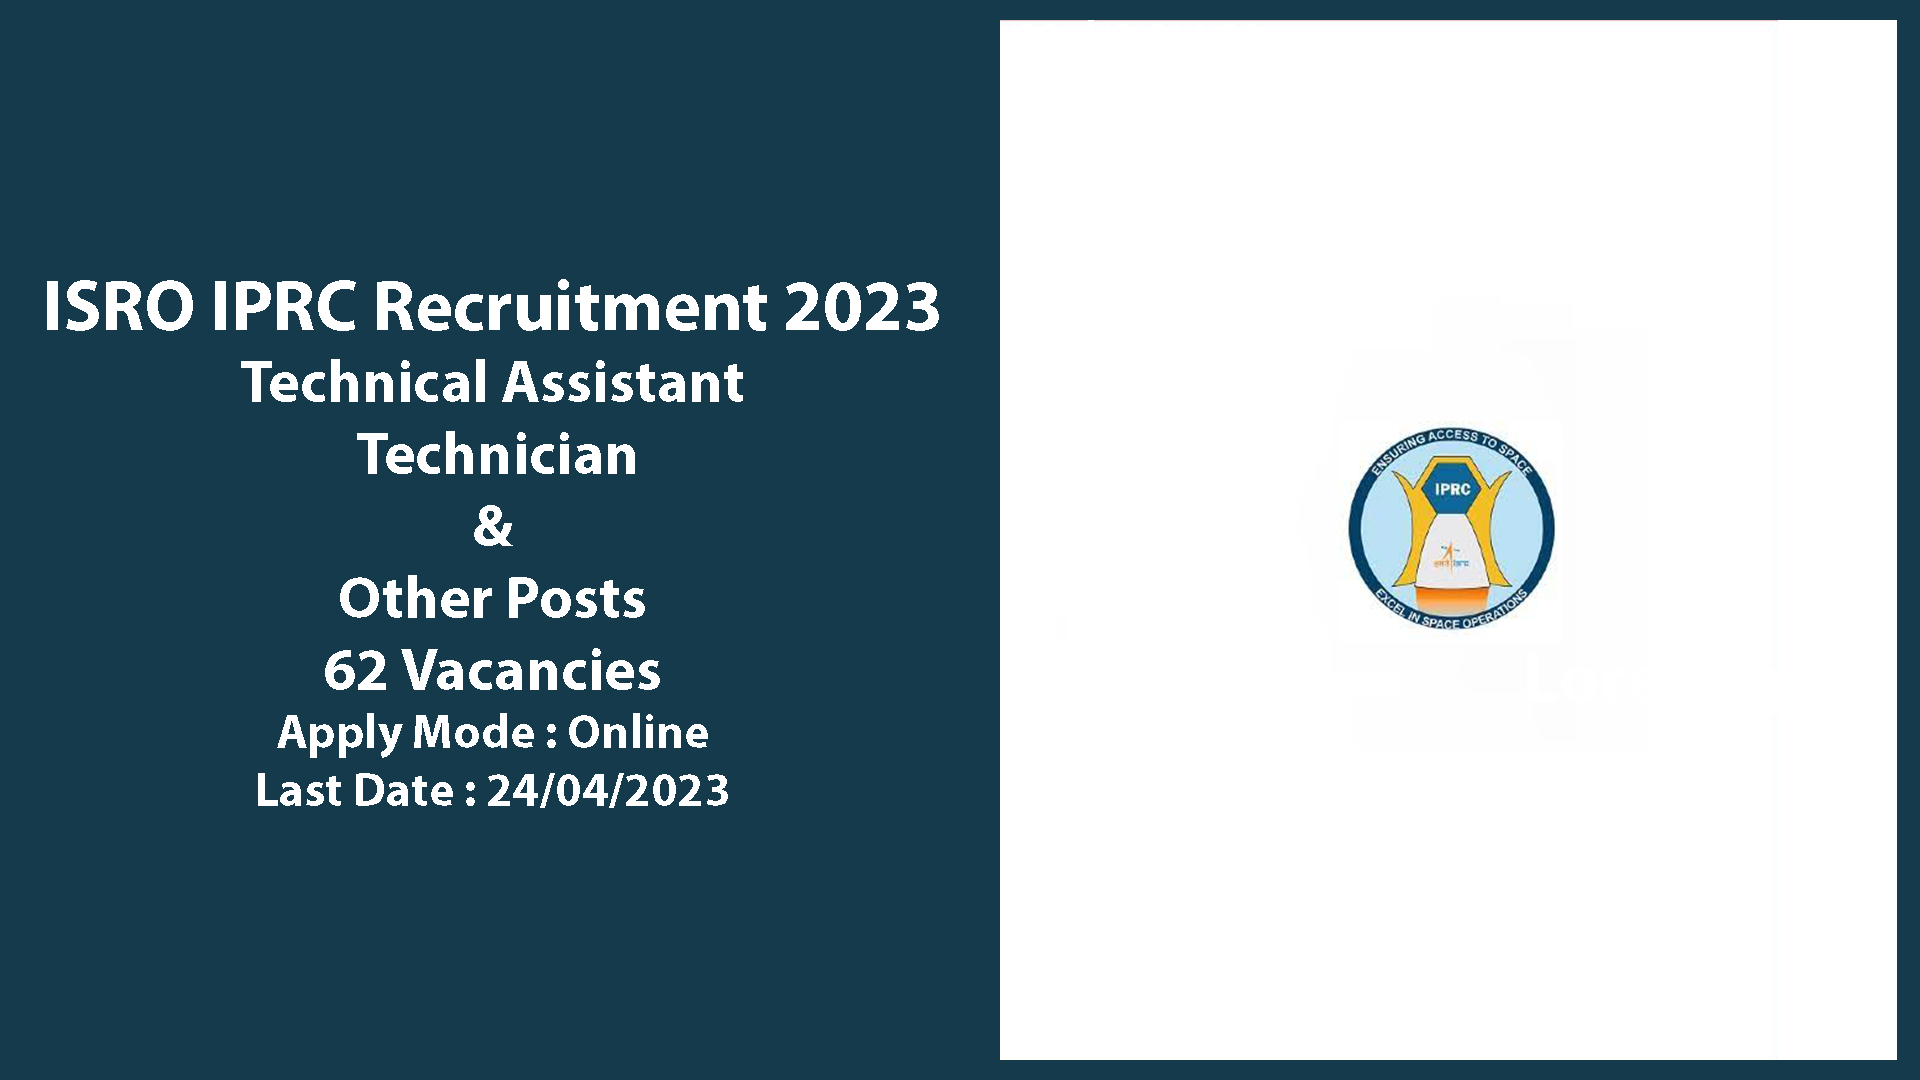 isro-iprc-recruitment-2023 apply now,ISRO IPRC റിക്രൂട്ട്‌മെന്റ് 2023 വിവിധ തസ്തികകളിലേക്ക് വിജ്ഞാപനം,